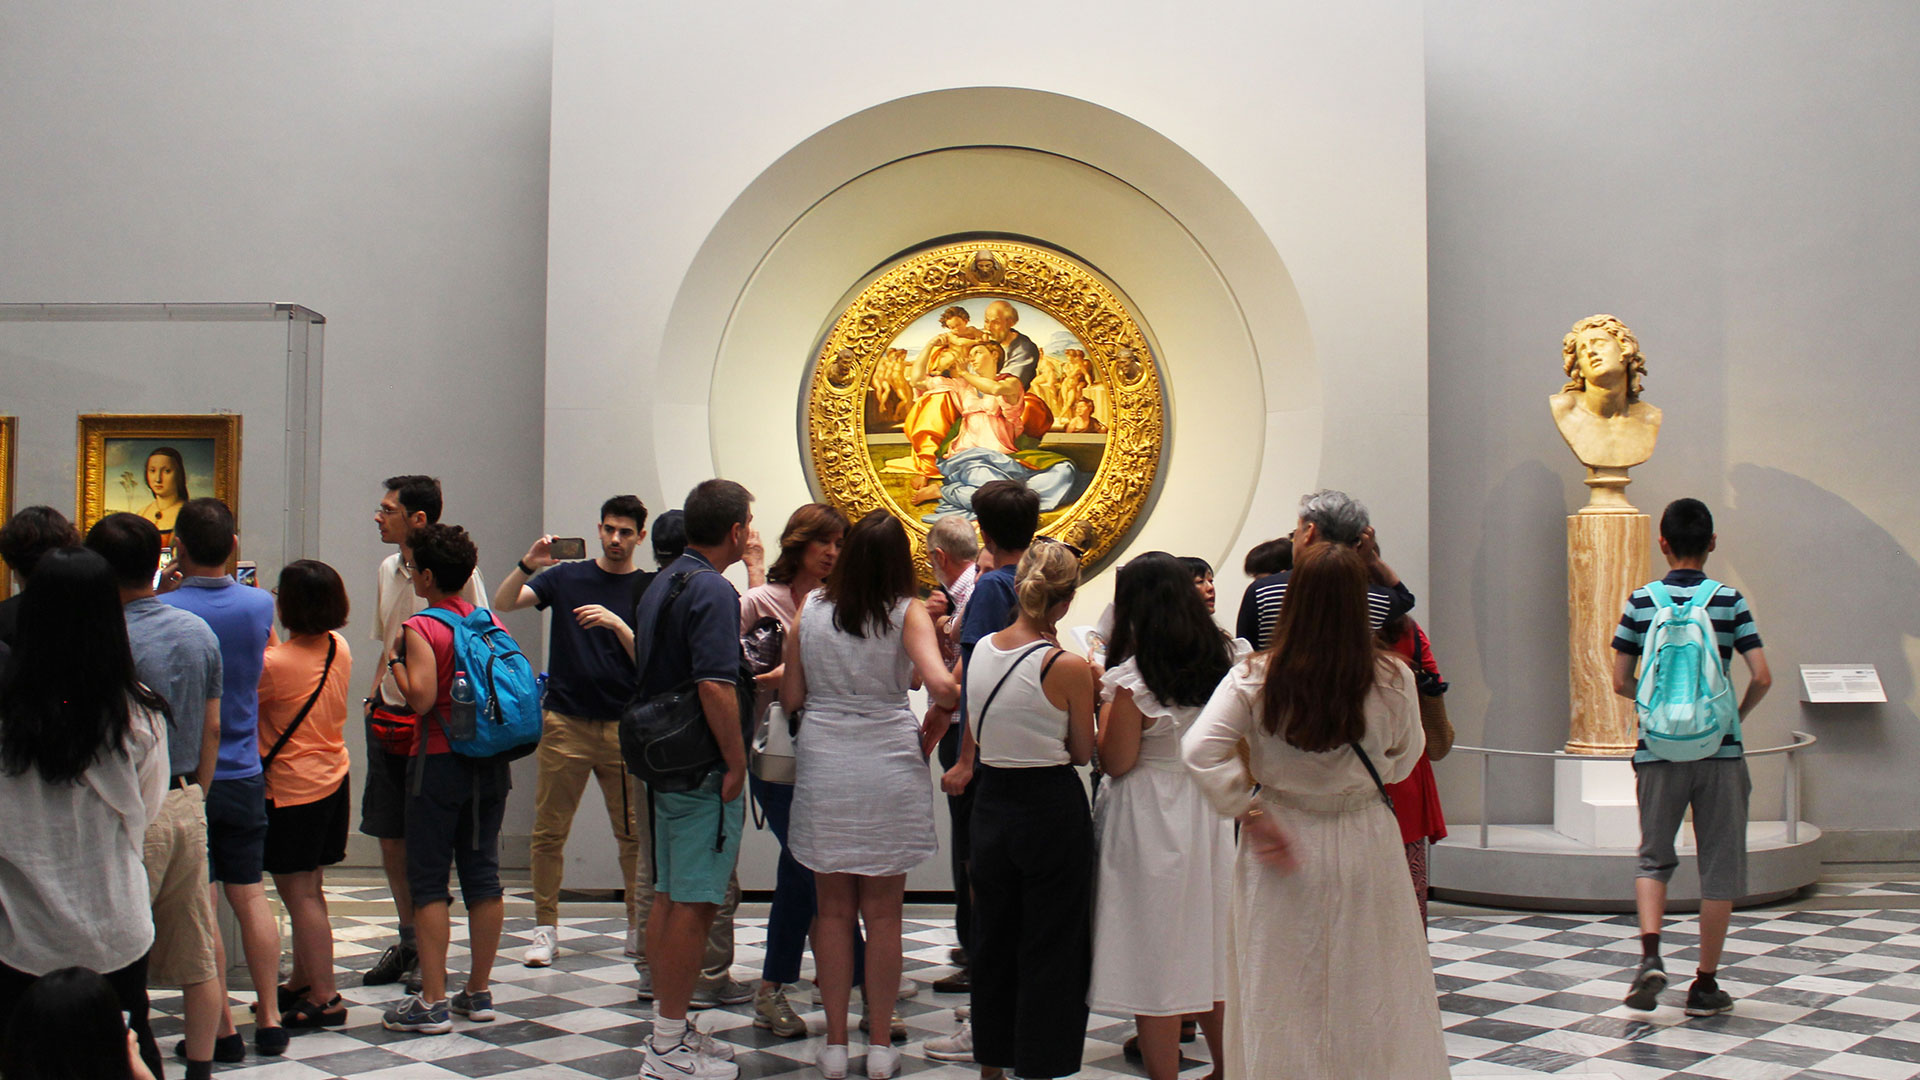 Raphael Room at the Uffizi Museum